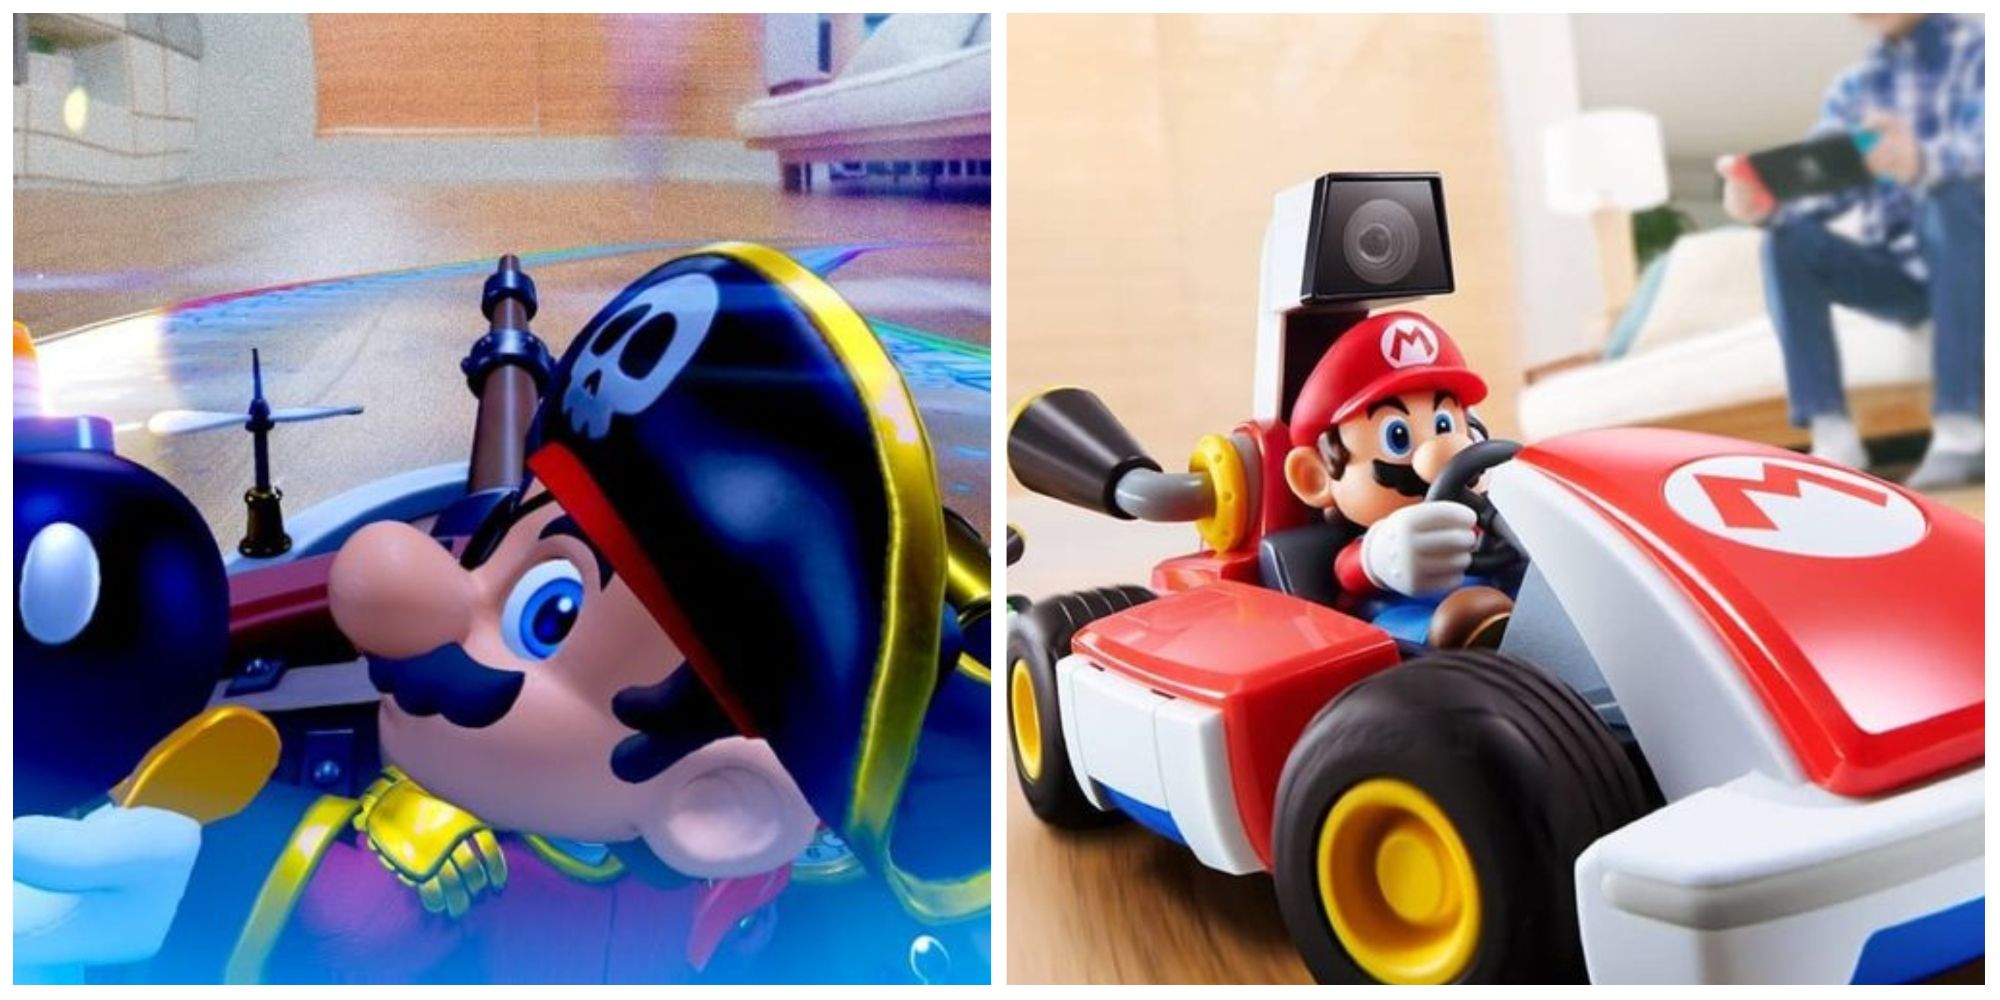 Mario Kart Live: Home Circuit — All unlockable costumes and karts